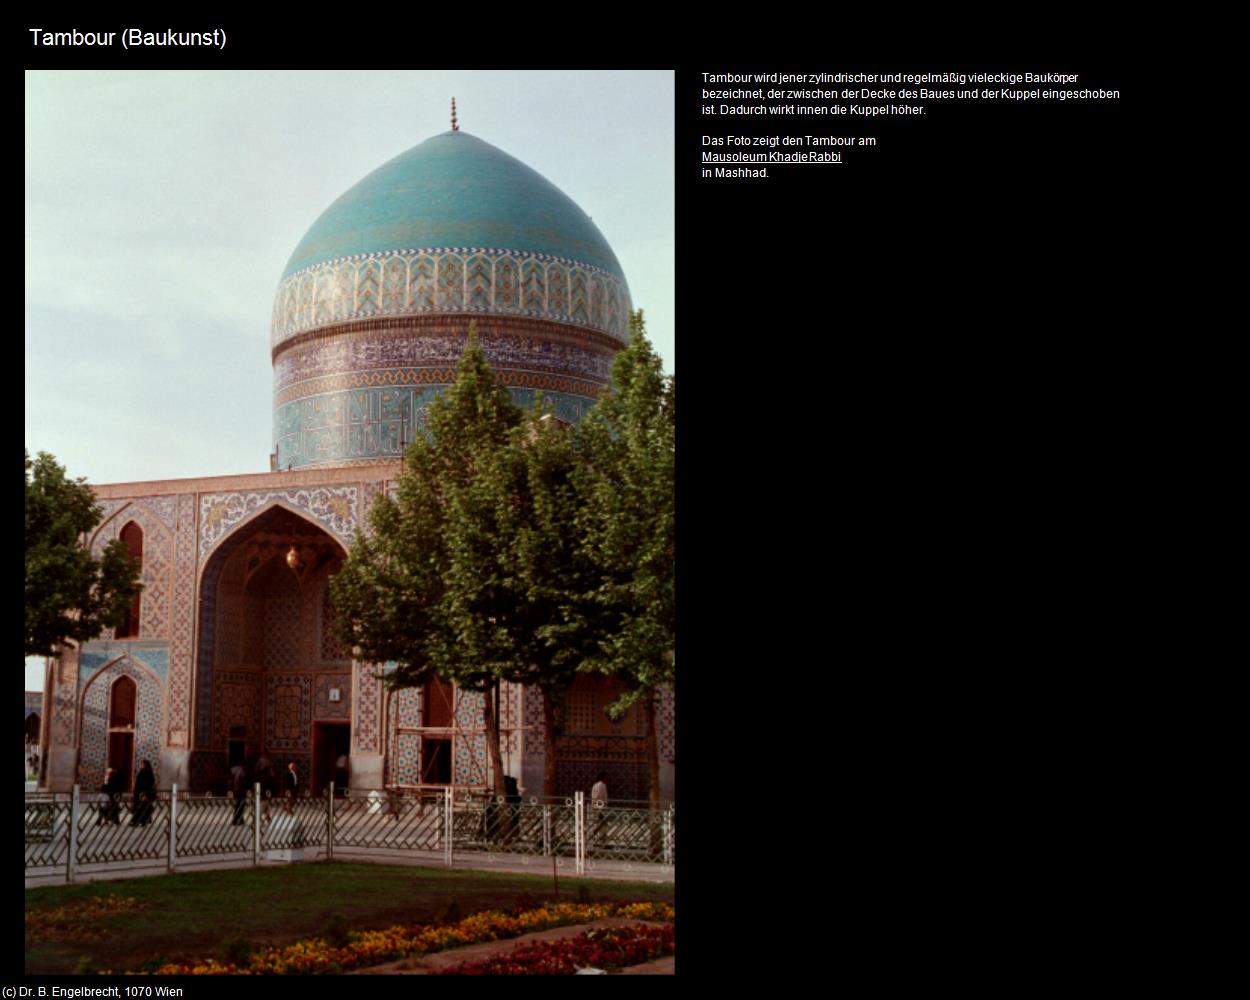 Tambour (IRAN-Baukunst) in Iran(c)B.Engelbrecht